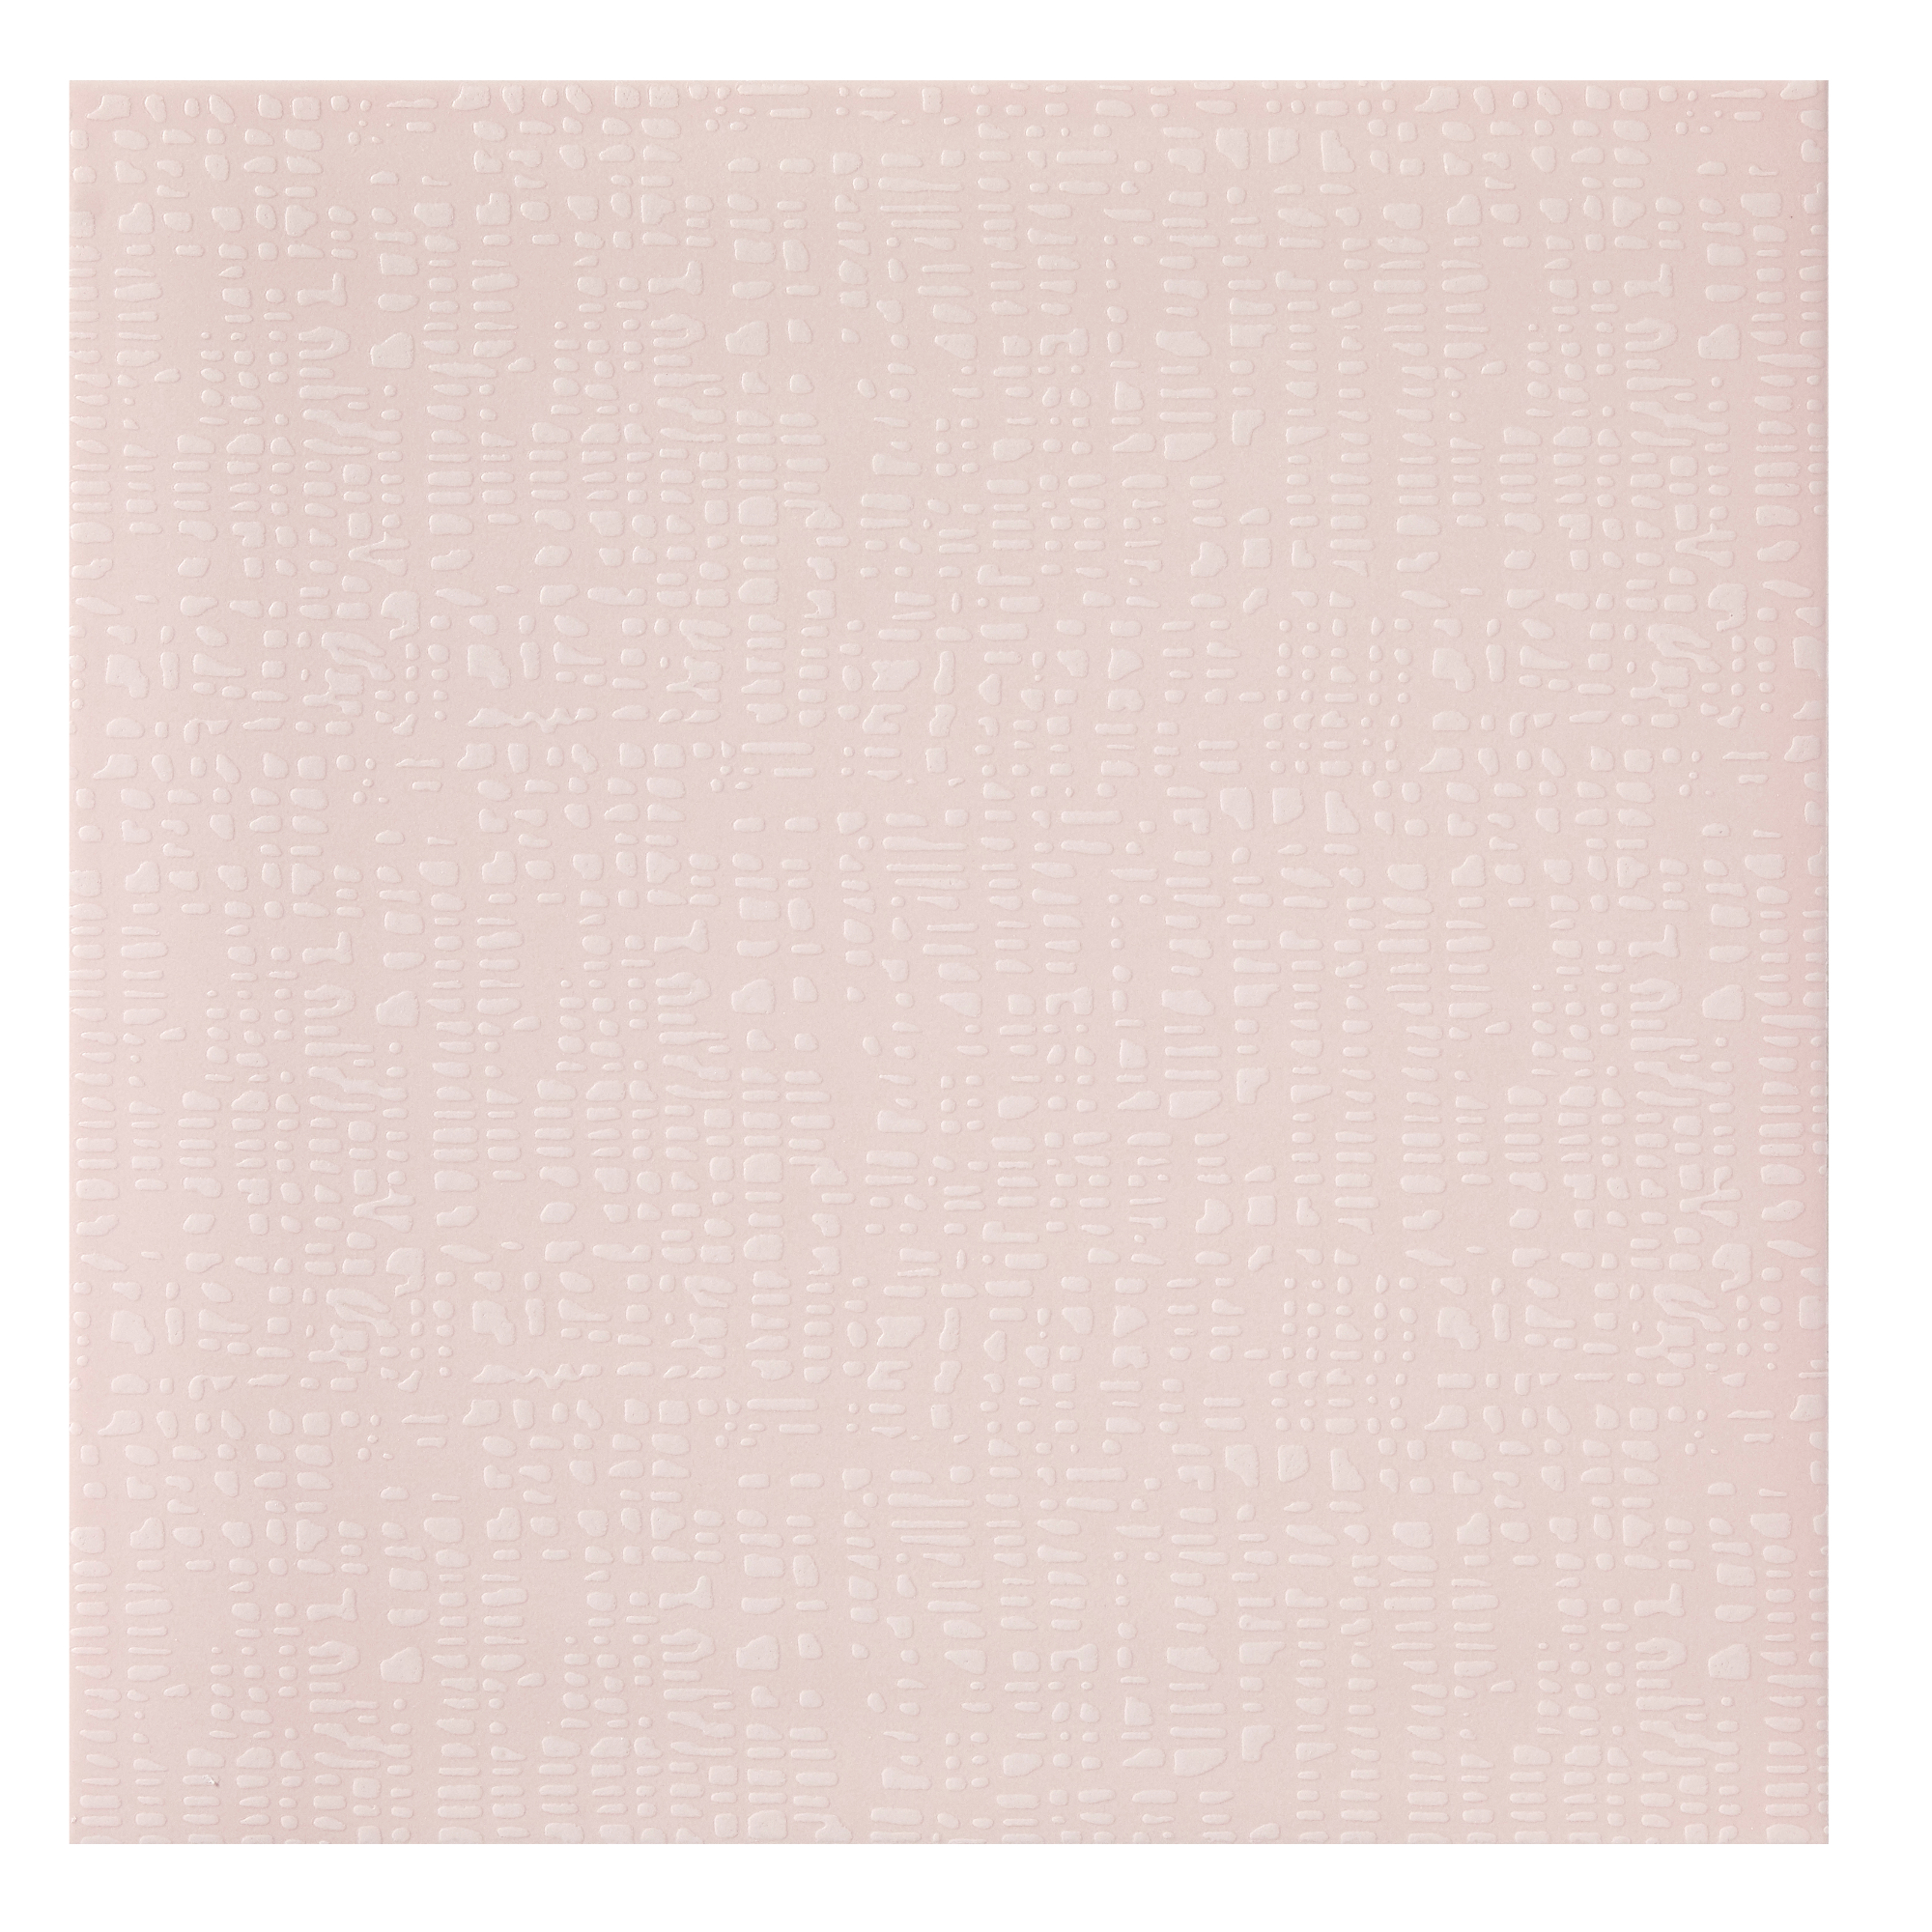 A. Selke Sketch Soft Pink 33cm